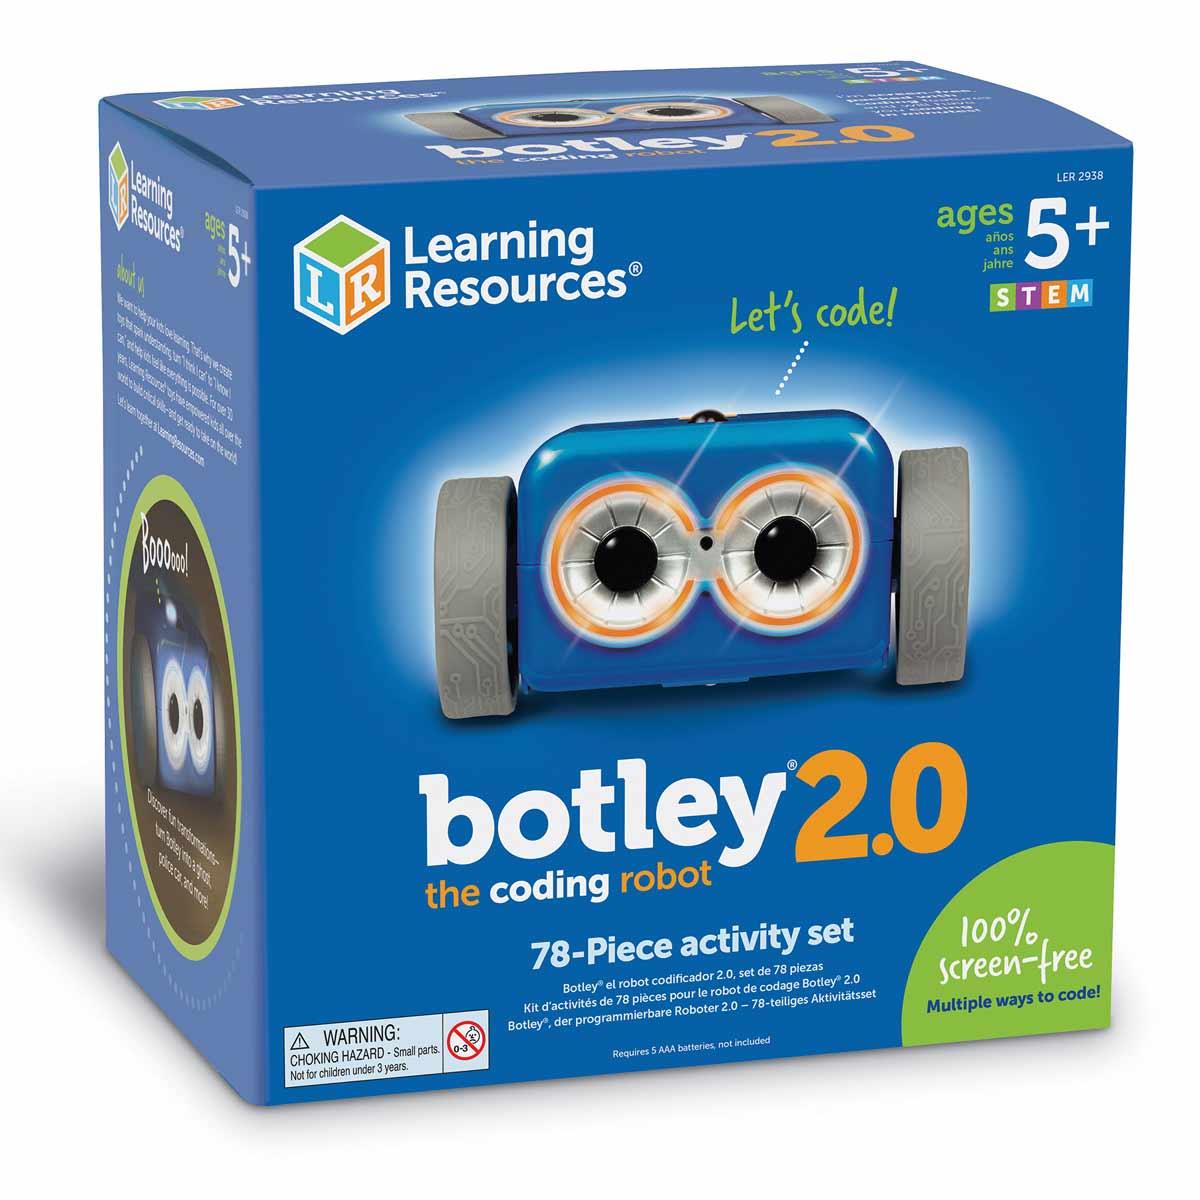 Botley® 2.0 the Coding Robot Activity Set - MoonyBoon